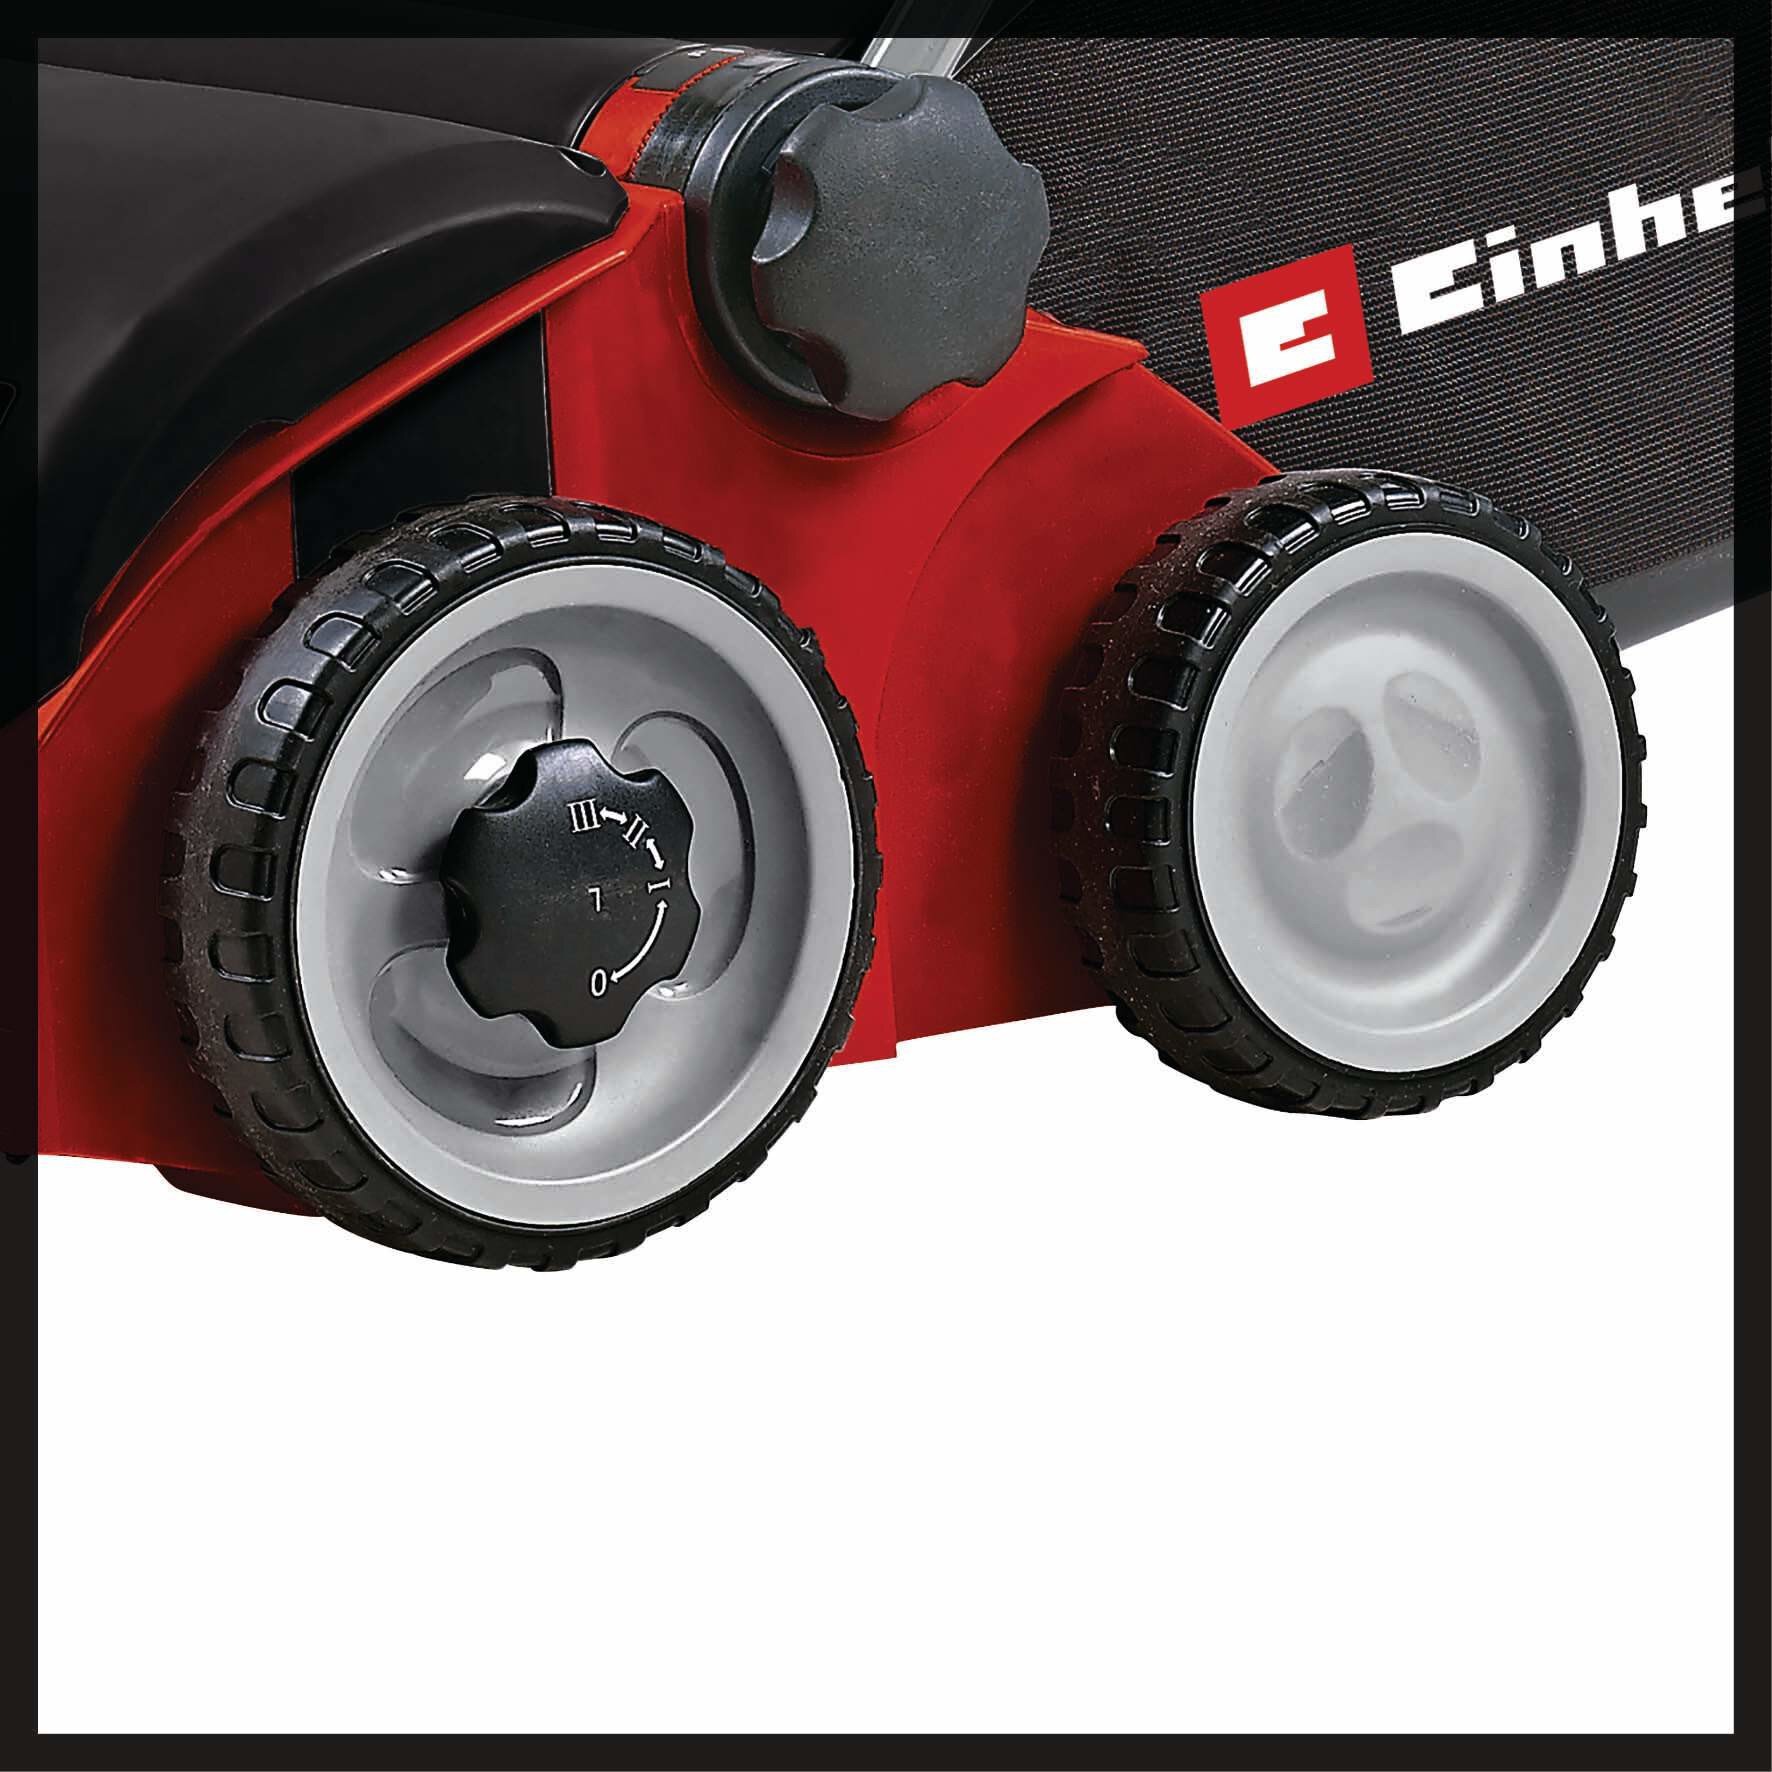 einhell-expert-electric-scarifier-lawn-aerat-3420520-detail_image-001